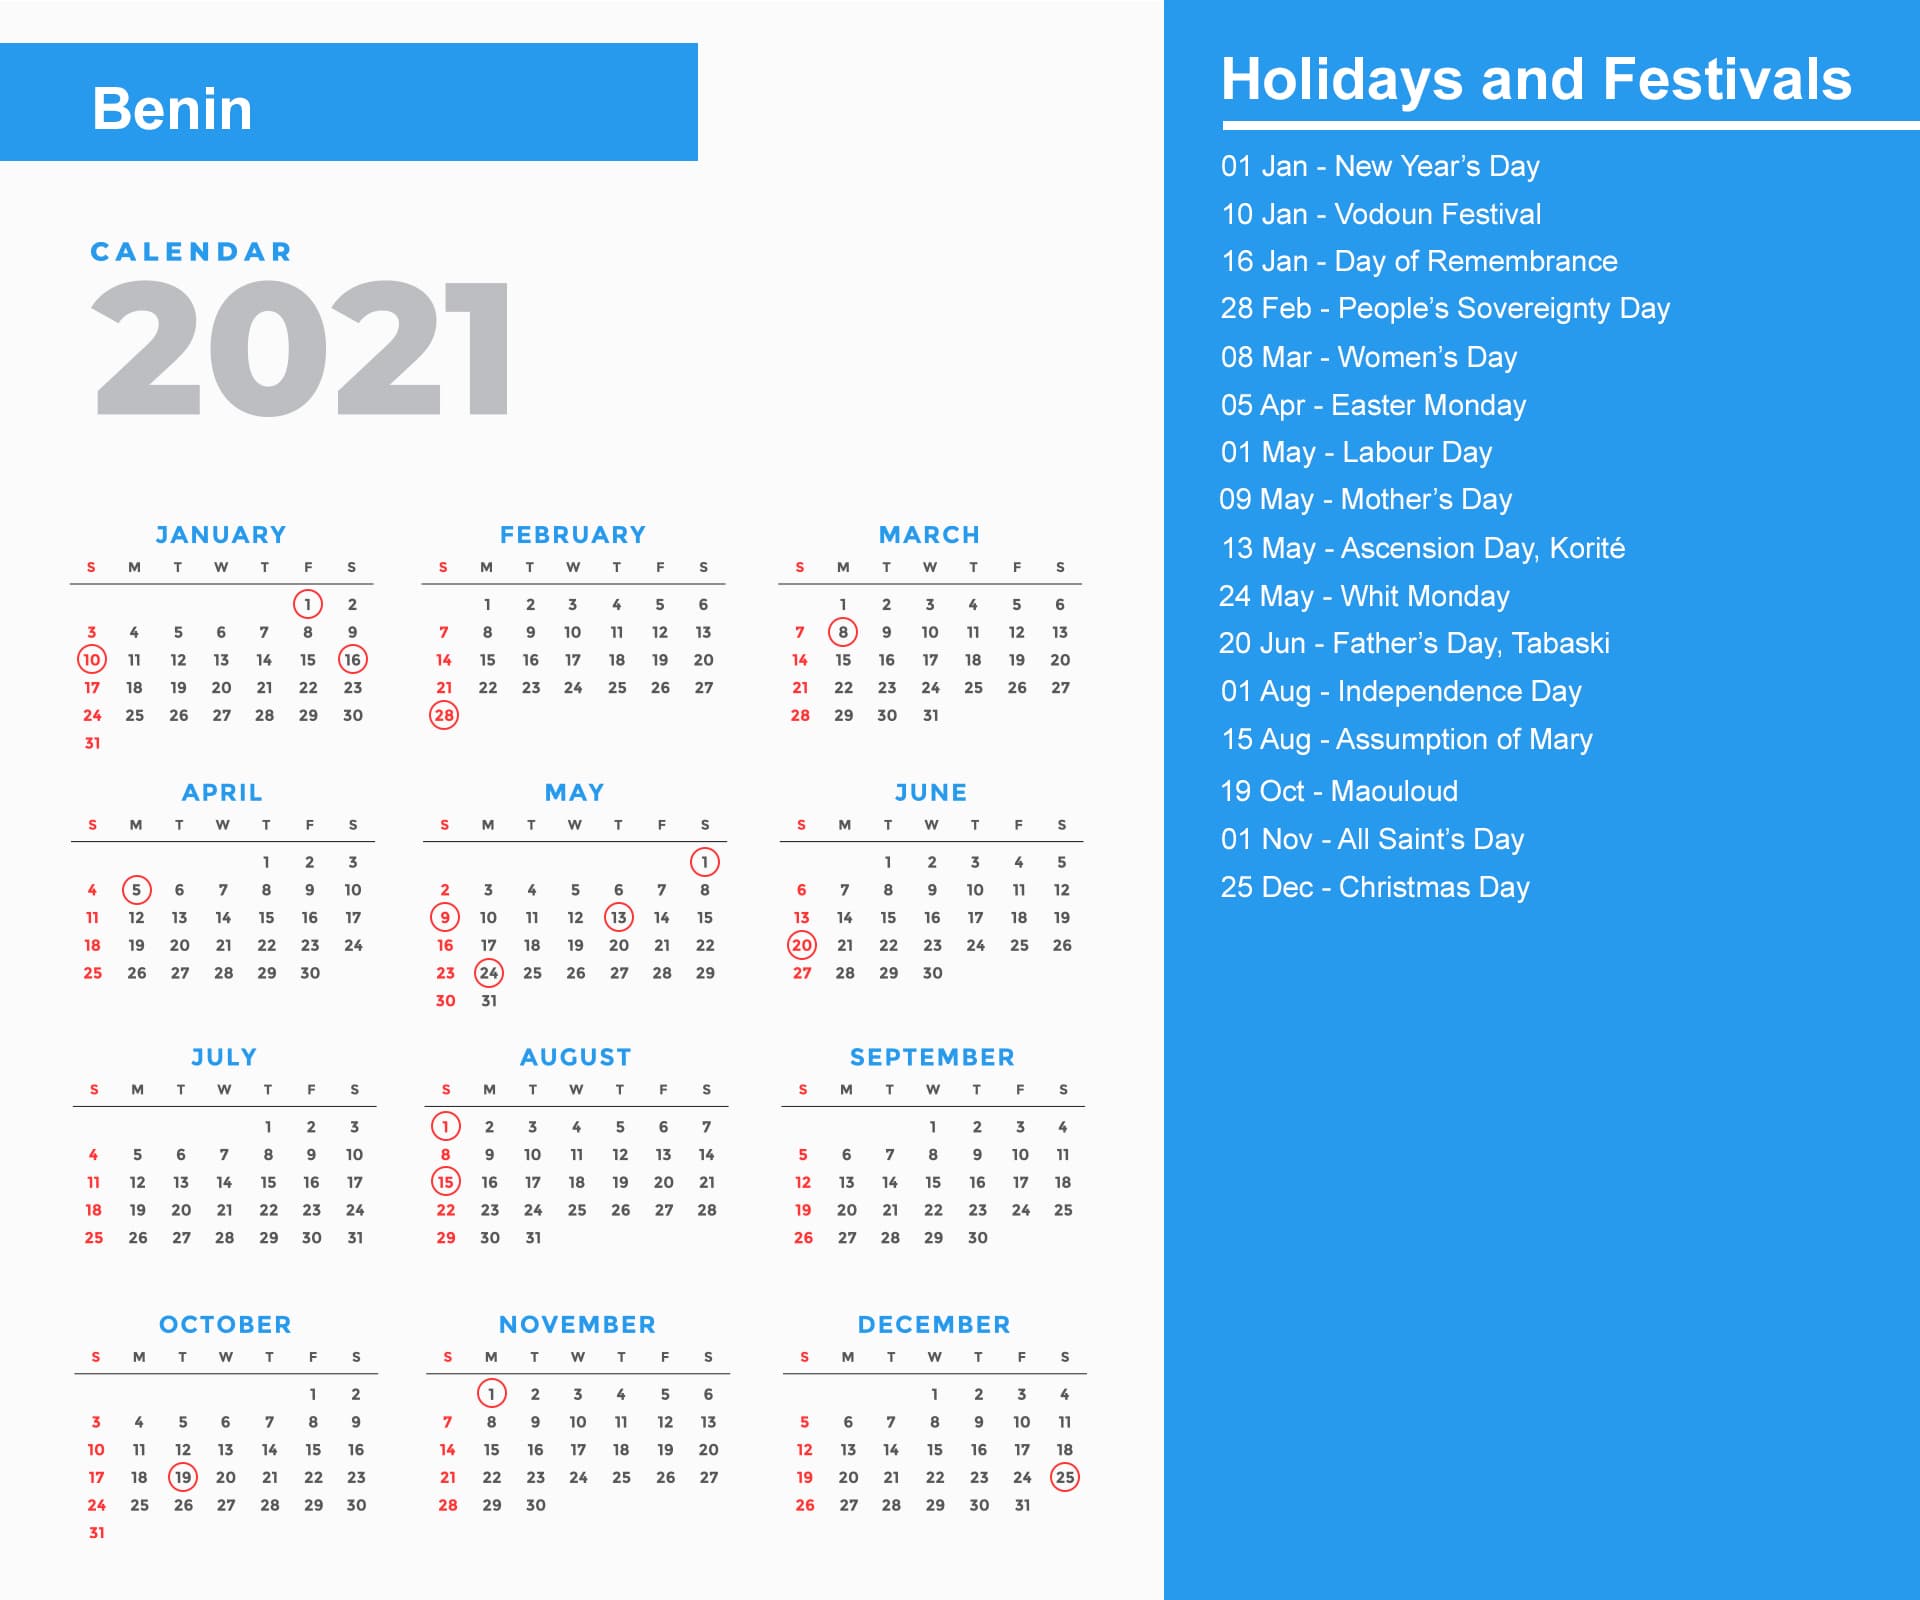 Benin Holidays Calendar 2021